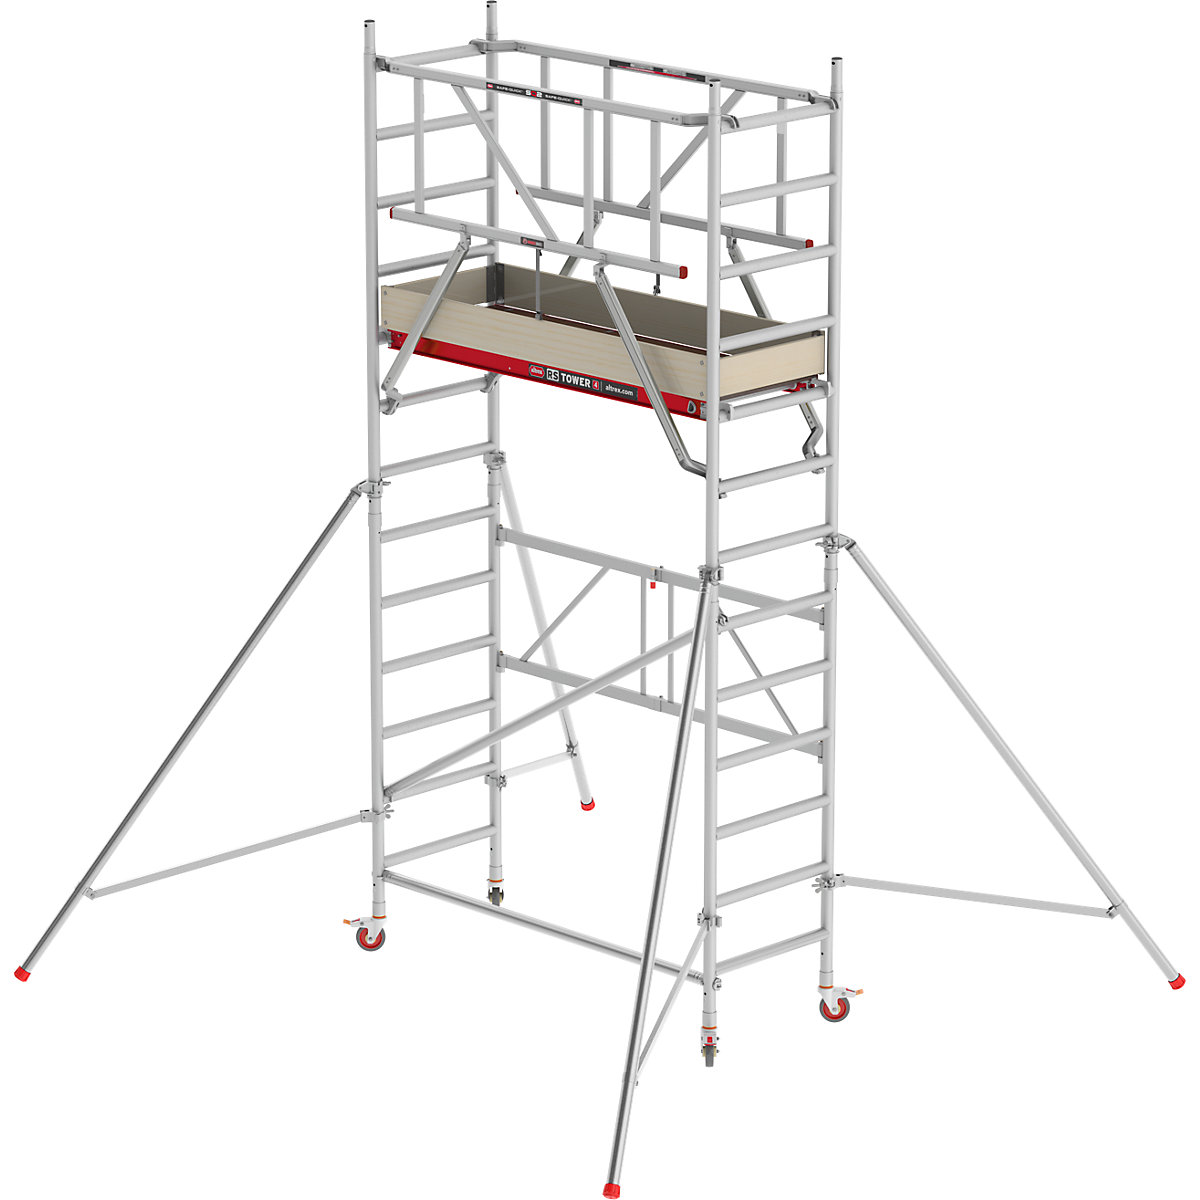 RS 44-POWER folding tower – Altrex, wooden platform, length 1.85 m, working height 4.70 m-6